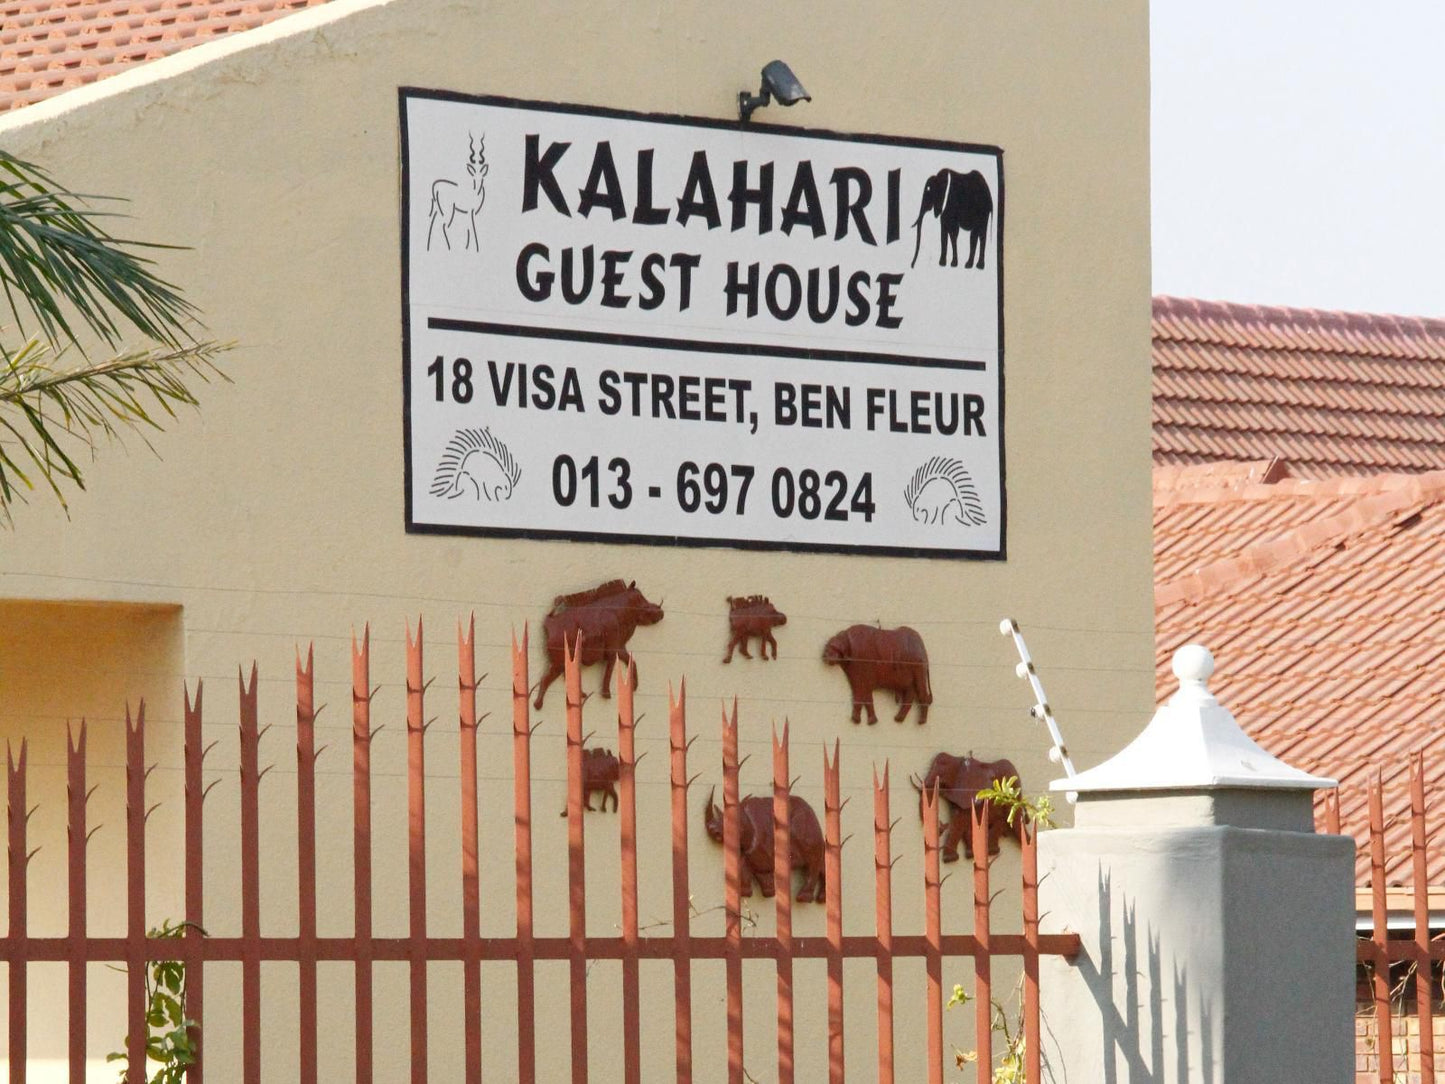 Kalahari Guest House Witbank Emalahleni Mpumalanga South Africa House, Building, Architecture, Sign, Window